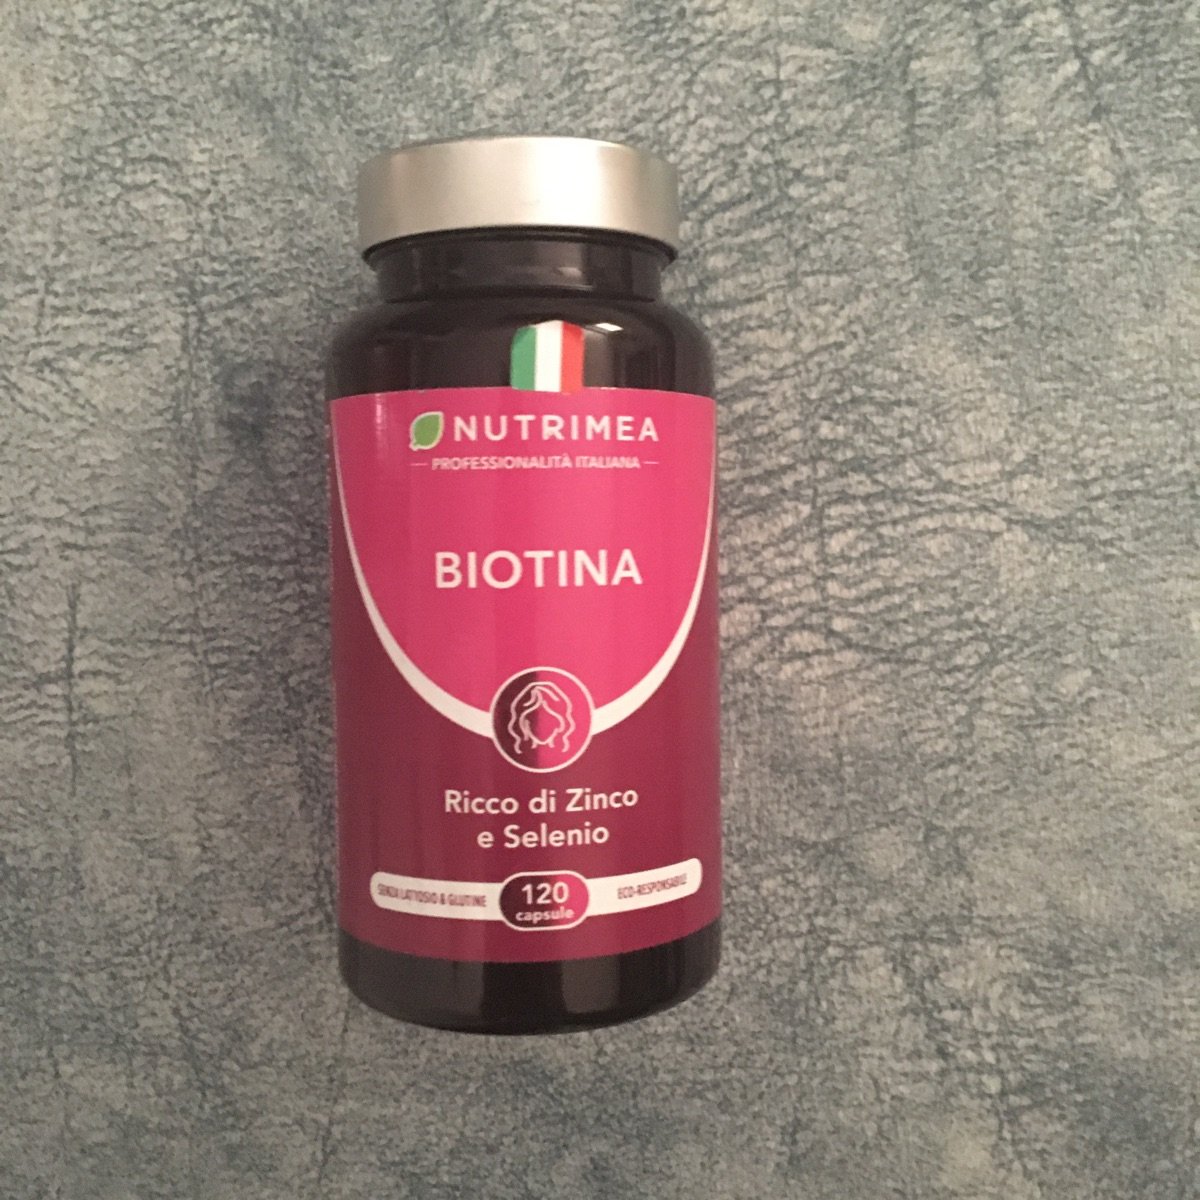 Nutrimea Biotina Reviews | abillion